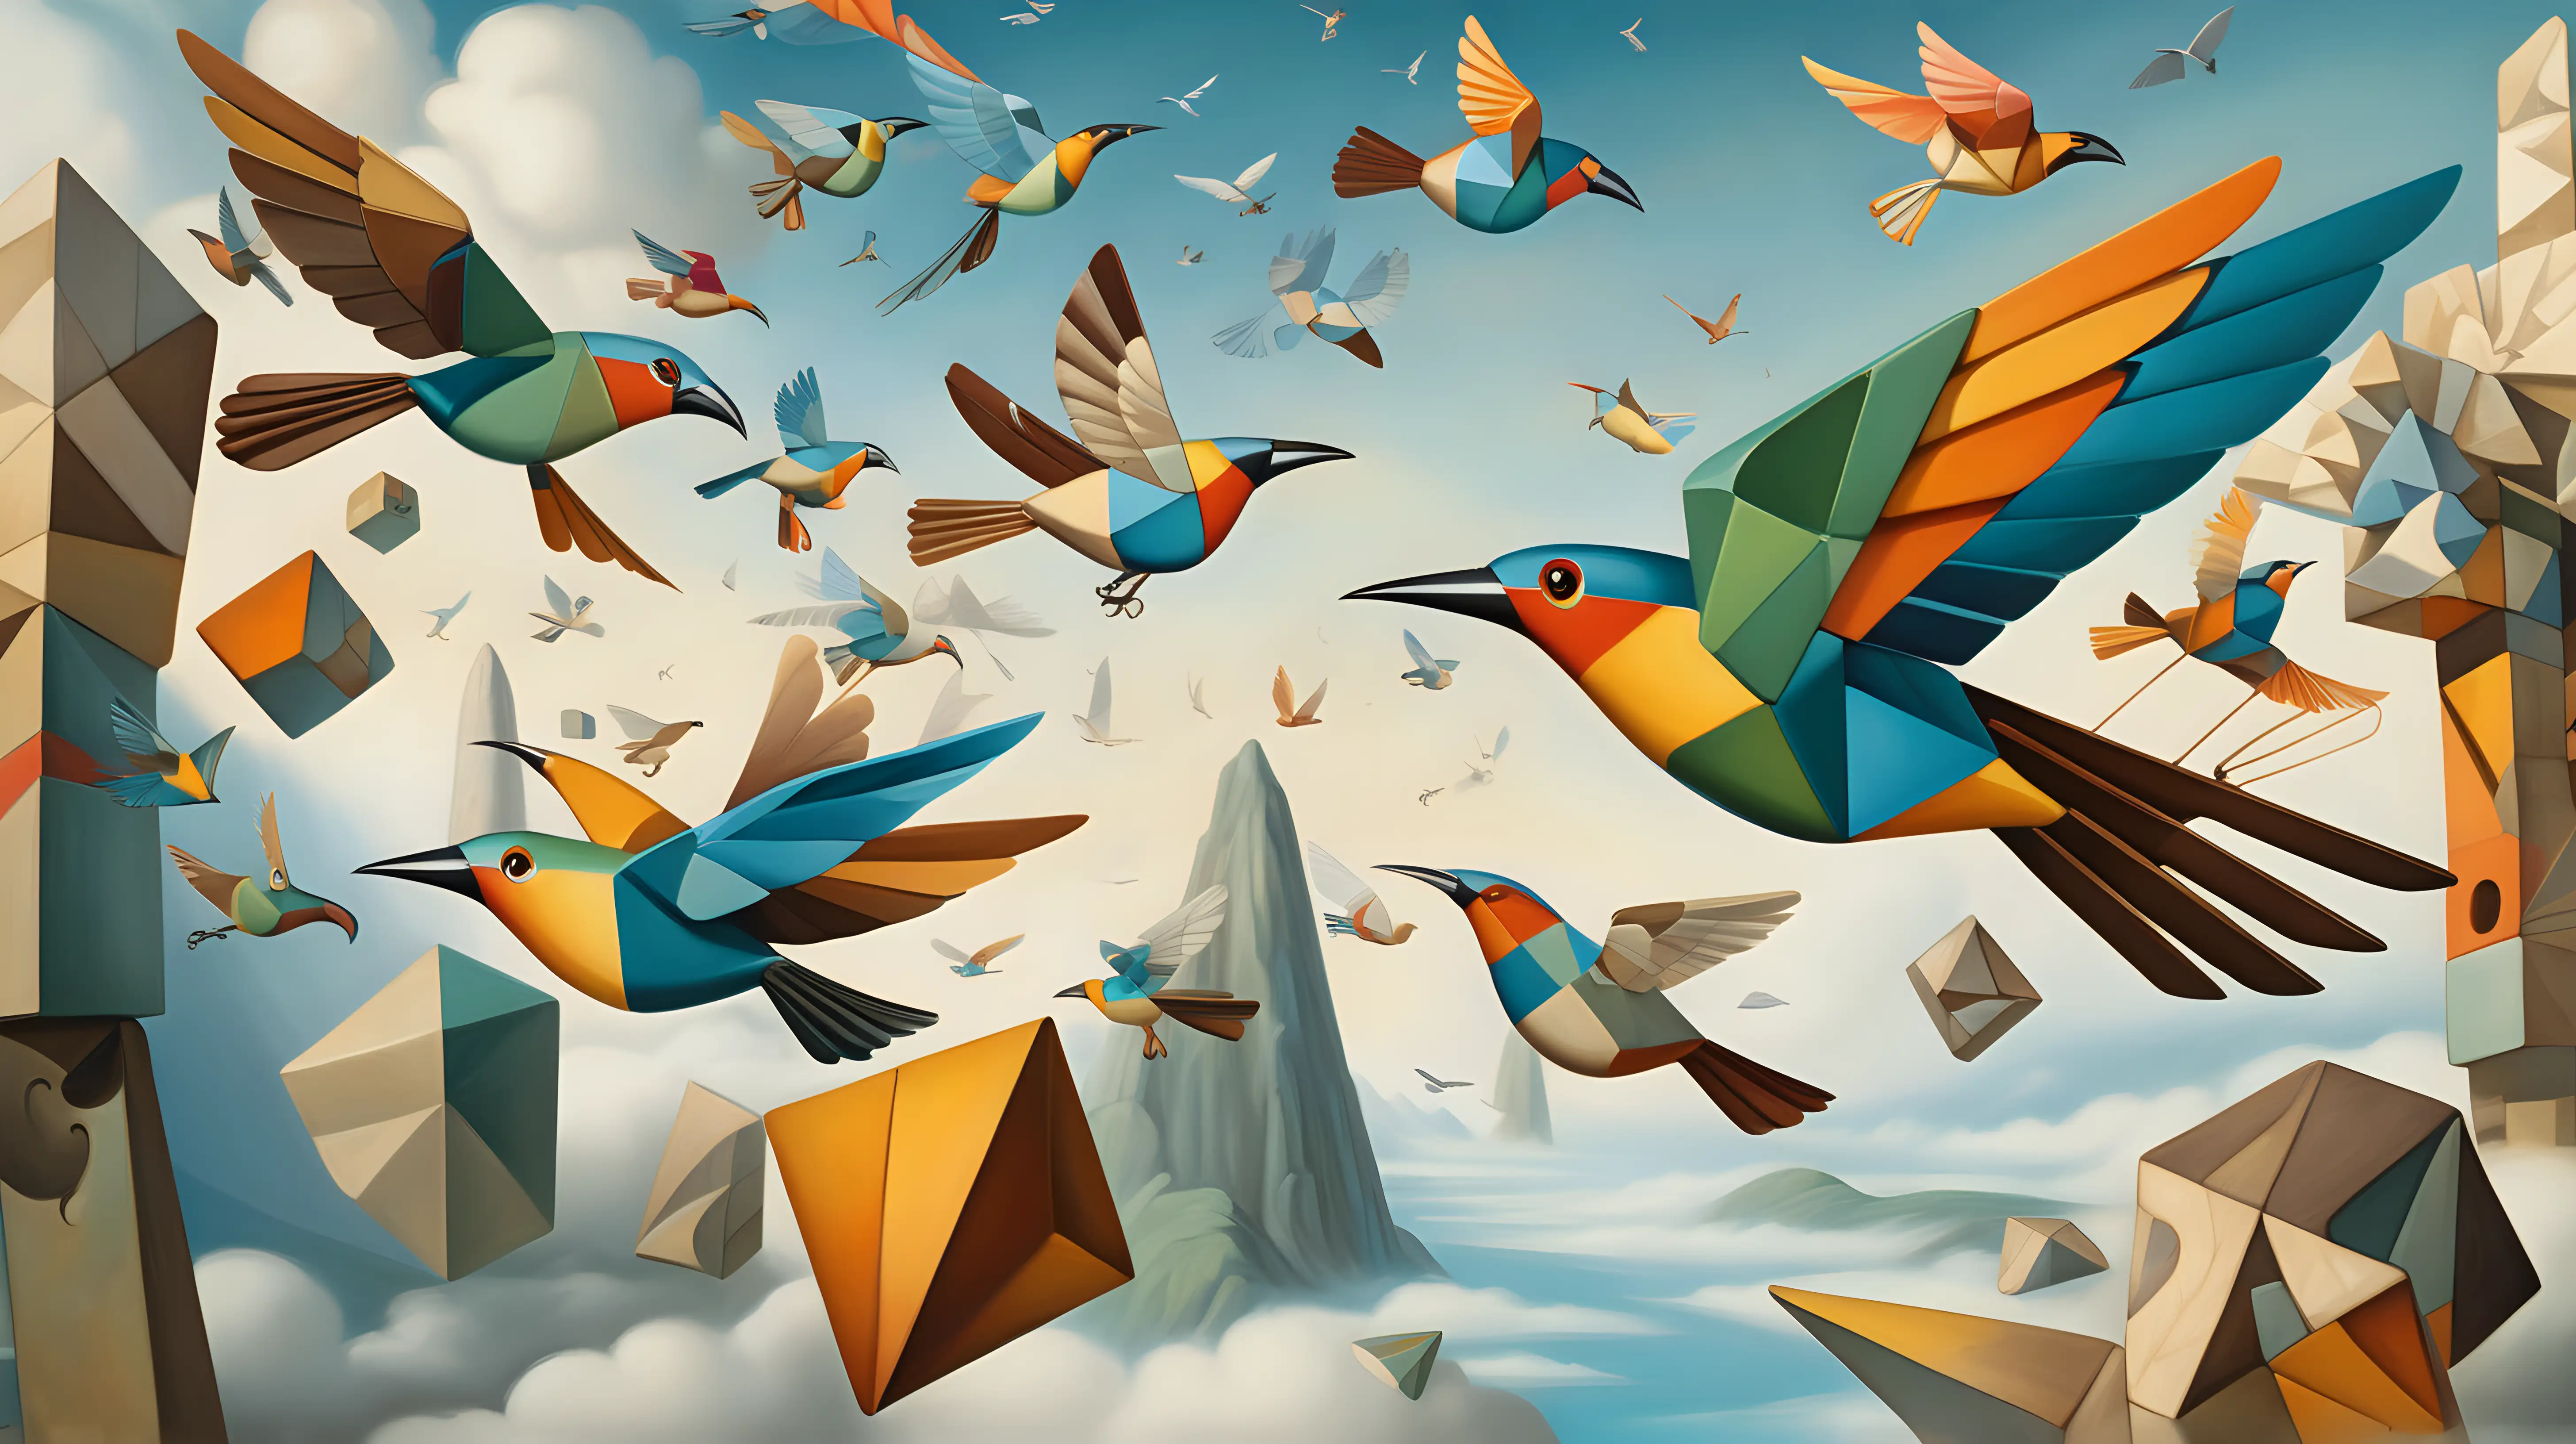 Cubist Dreams of Flight Surreal Skyward Soaring in Cubist Interpretation